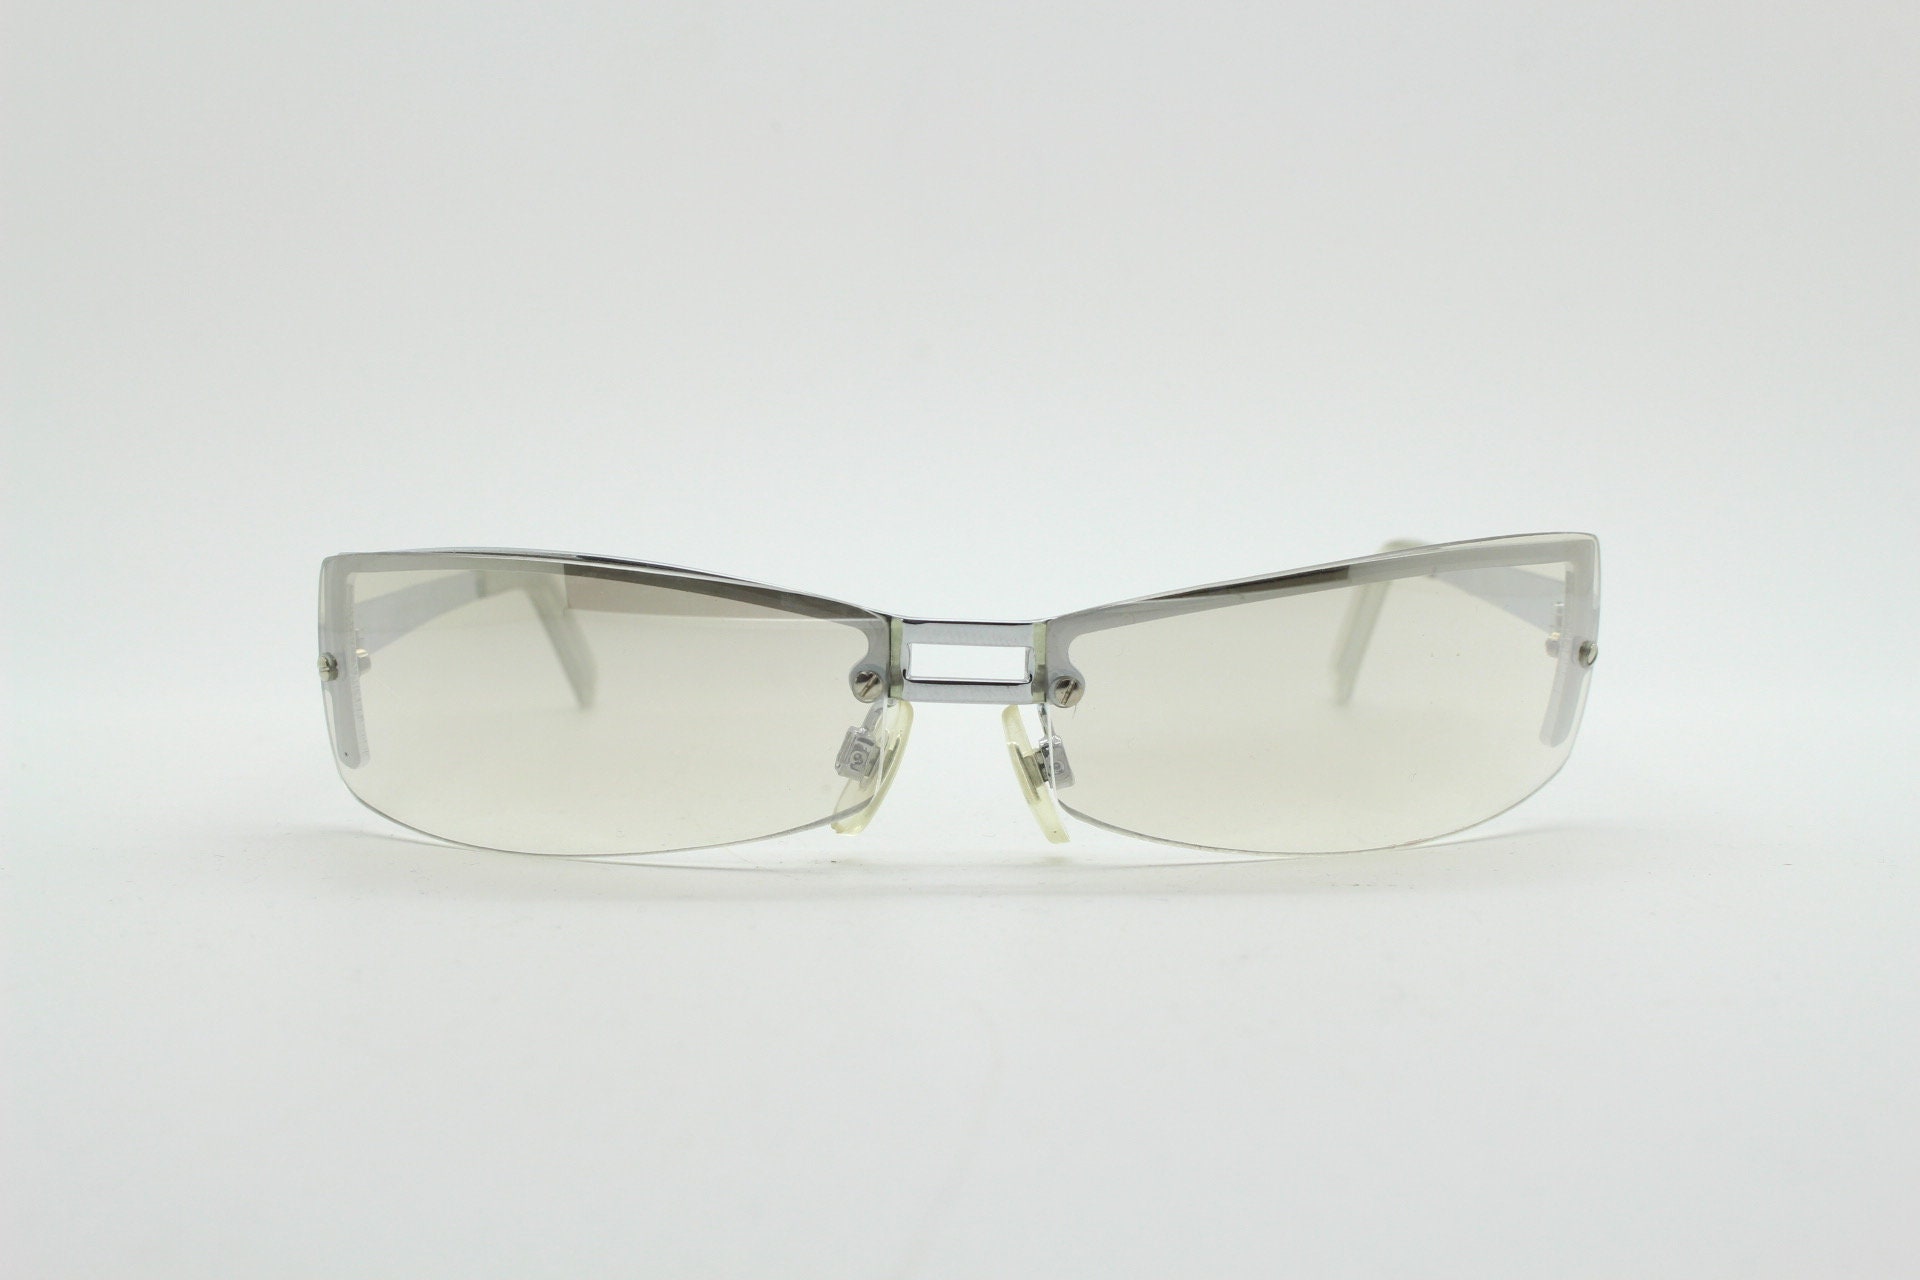 Y2K Vintage Wraparound Sunglasses. Half Frame in Chrome With 